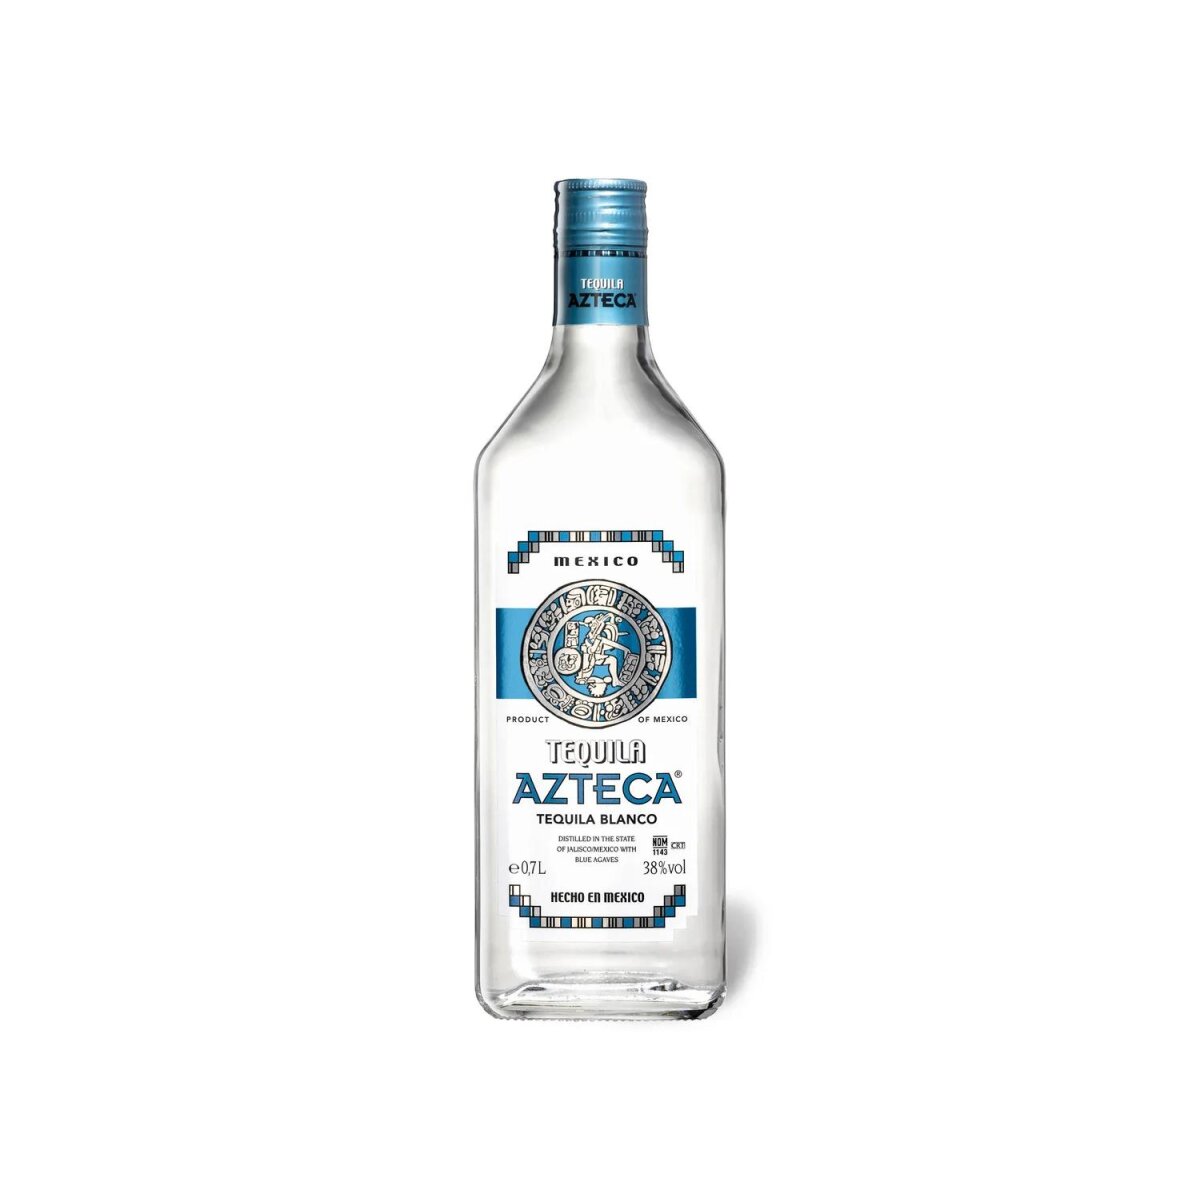 Azteca Tequila Blanco 38% Vol, 8,99 €